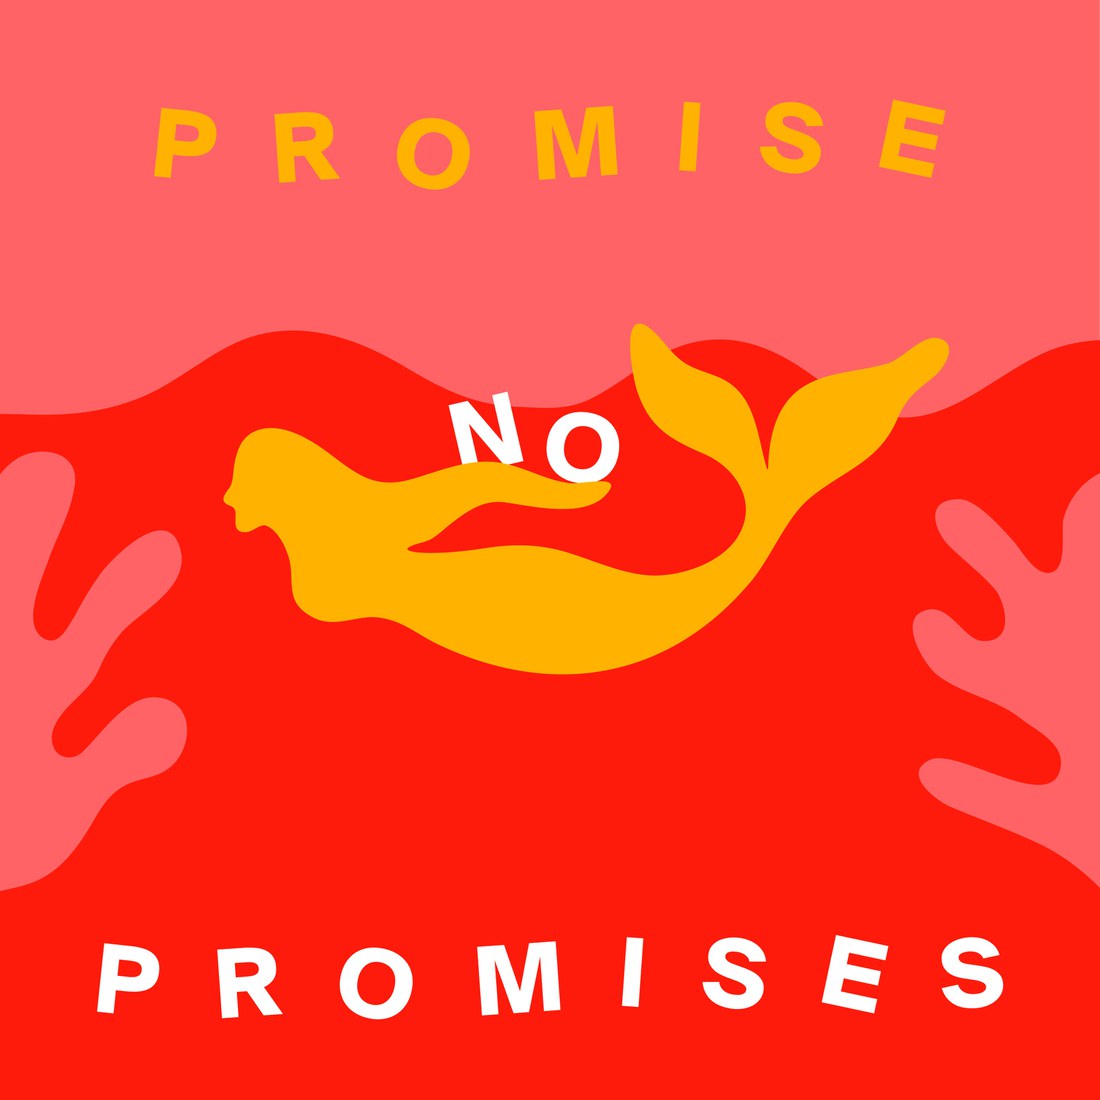 Promises_No Promises_Square.jpg